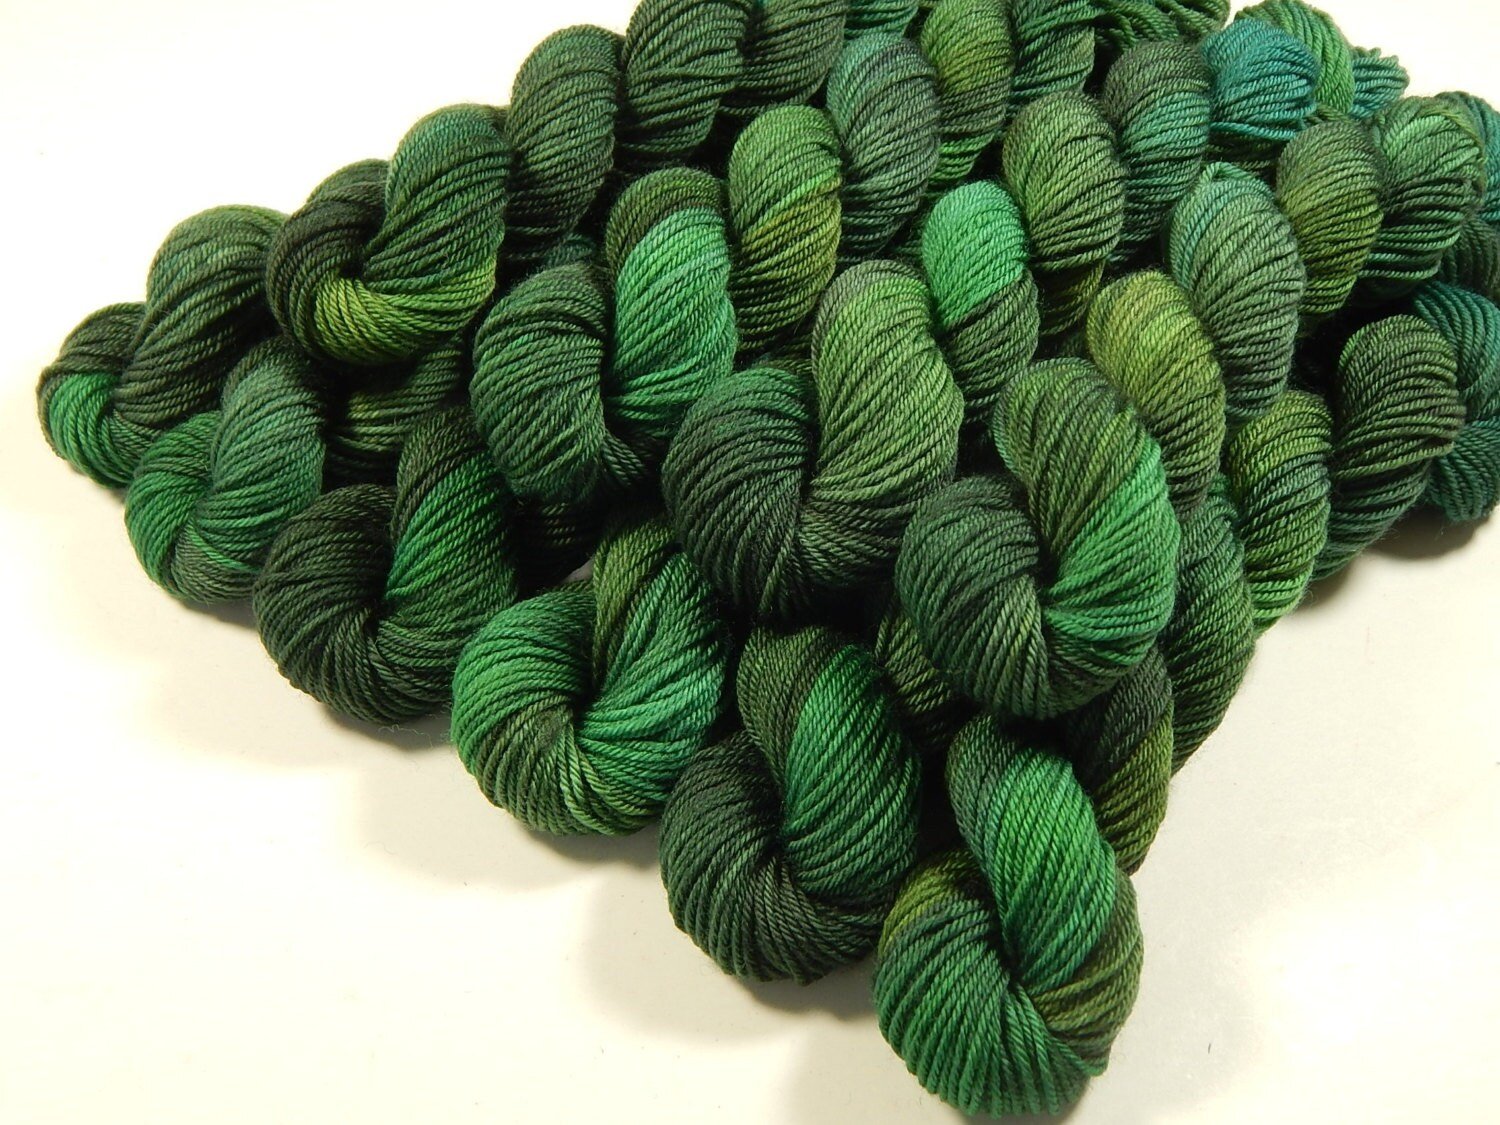 Mini Skeins Hand Dyed Yarn, Sock Weight 4 Ply Superwash Merino Wool - Forest Multi - Indie Dyed Sock Yarn, Green Fingering Knitting Yarn